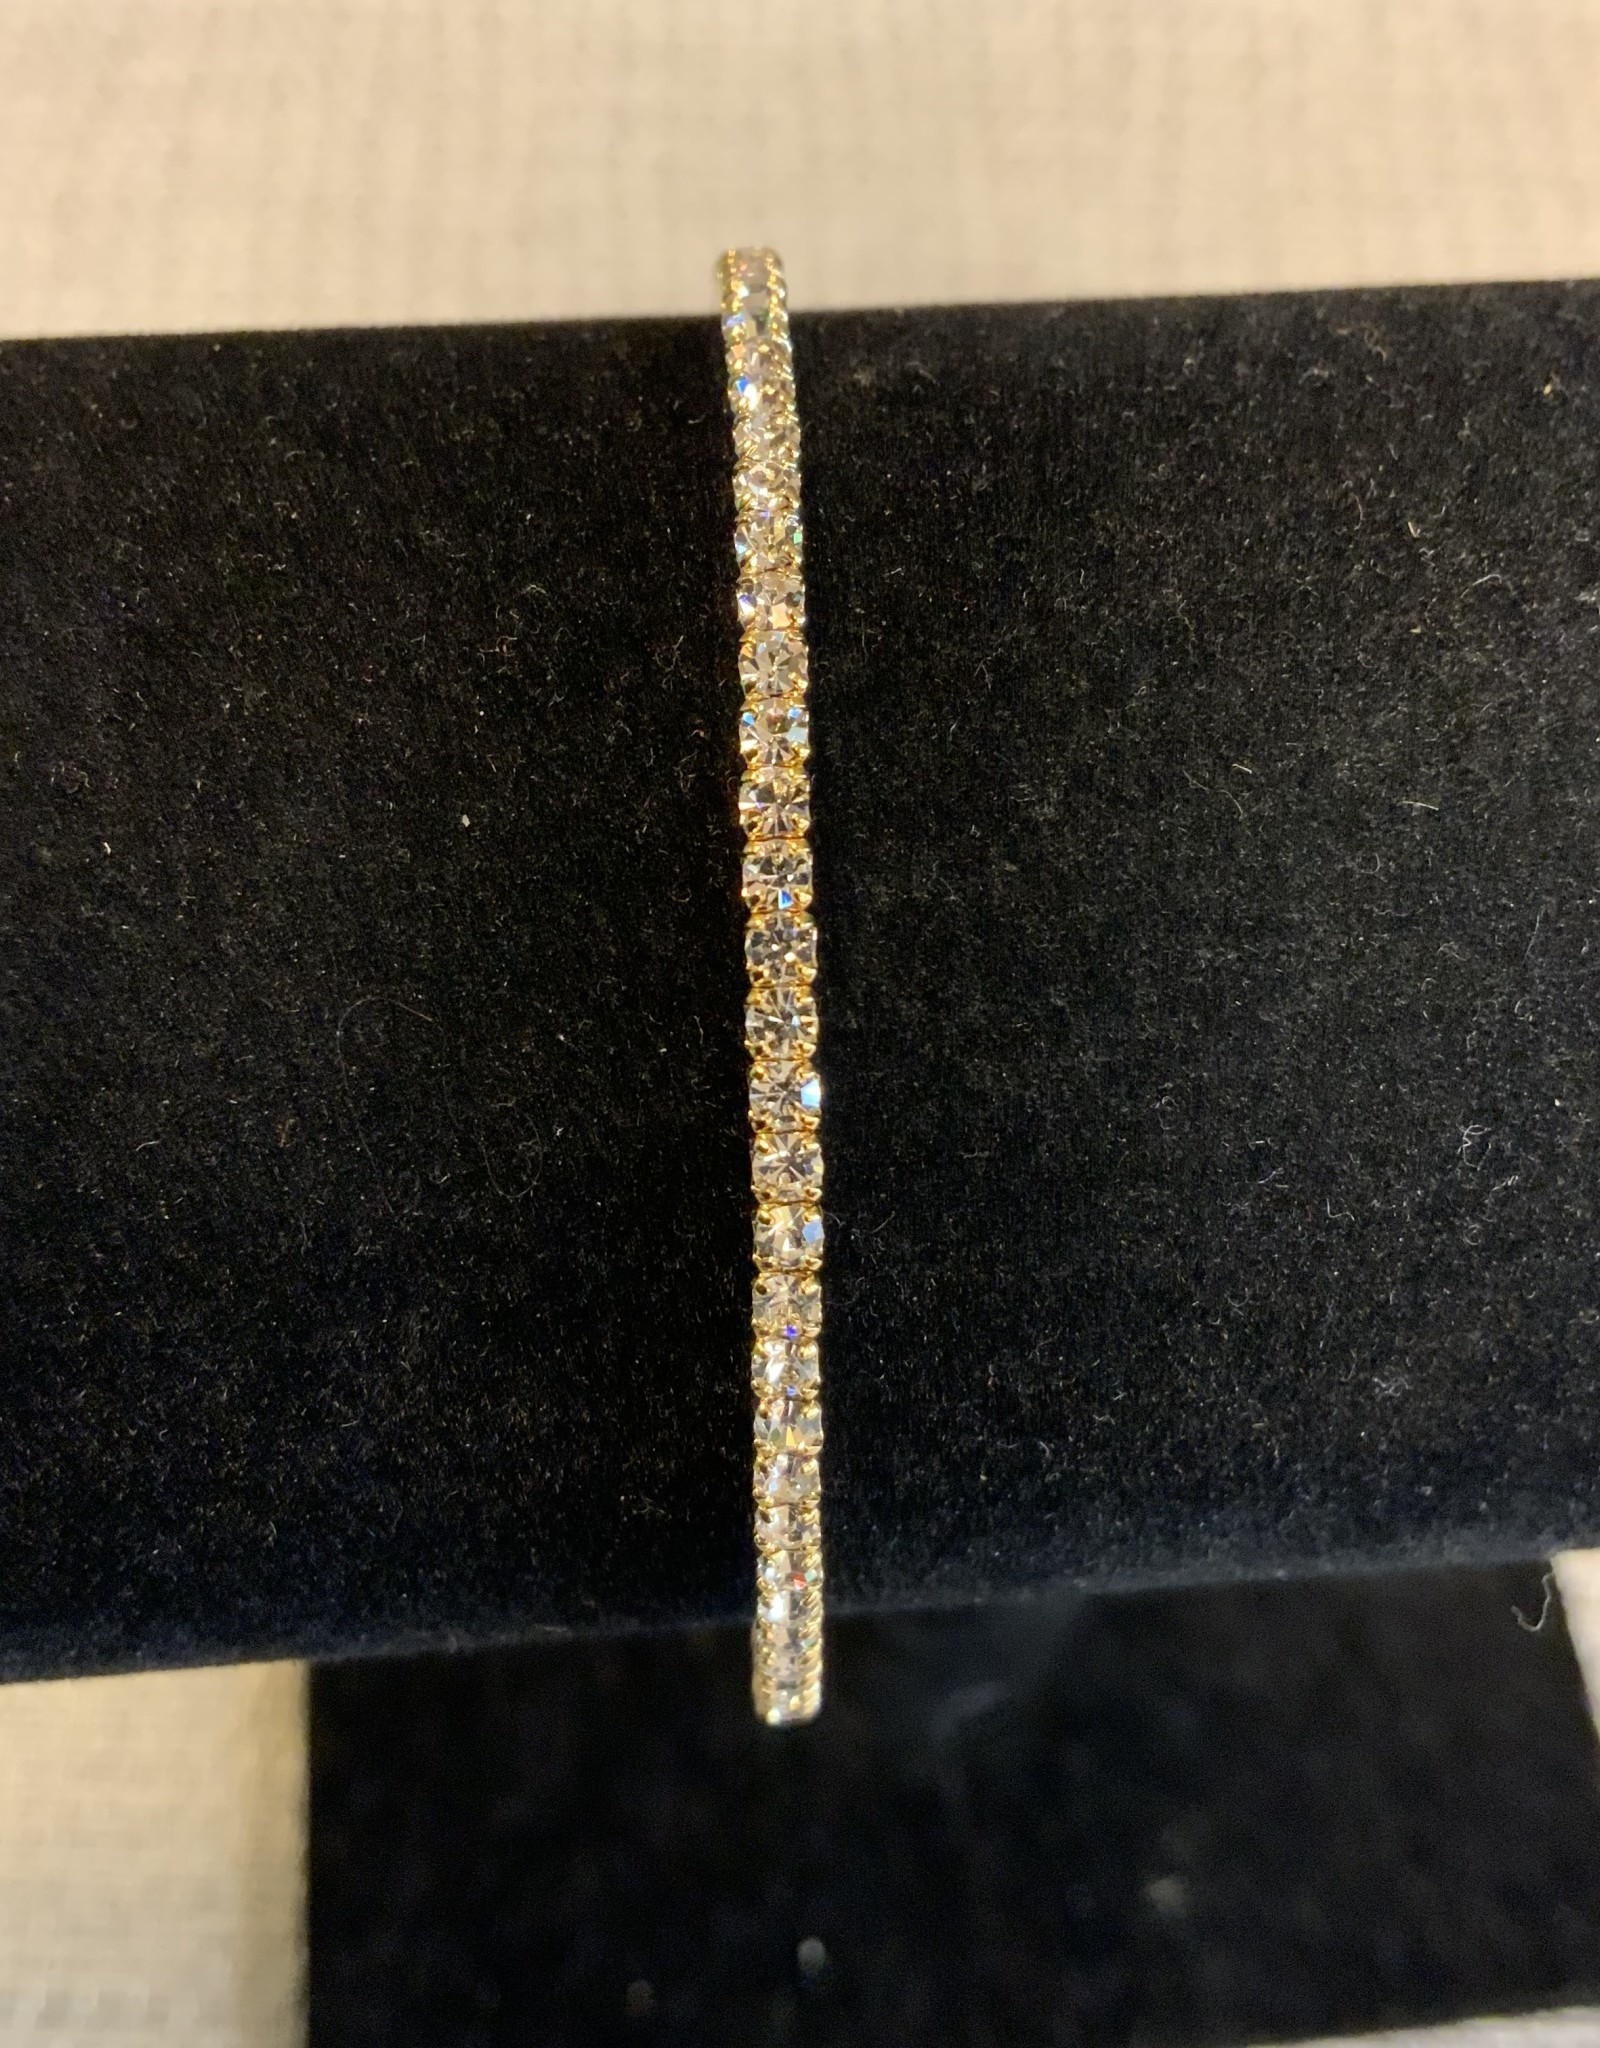 Crystal Slip-On Bracelet - Gold